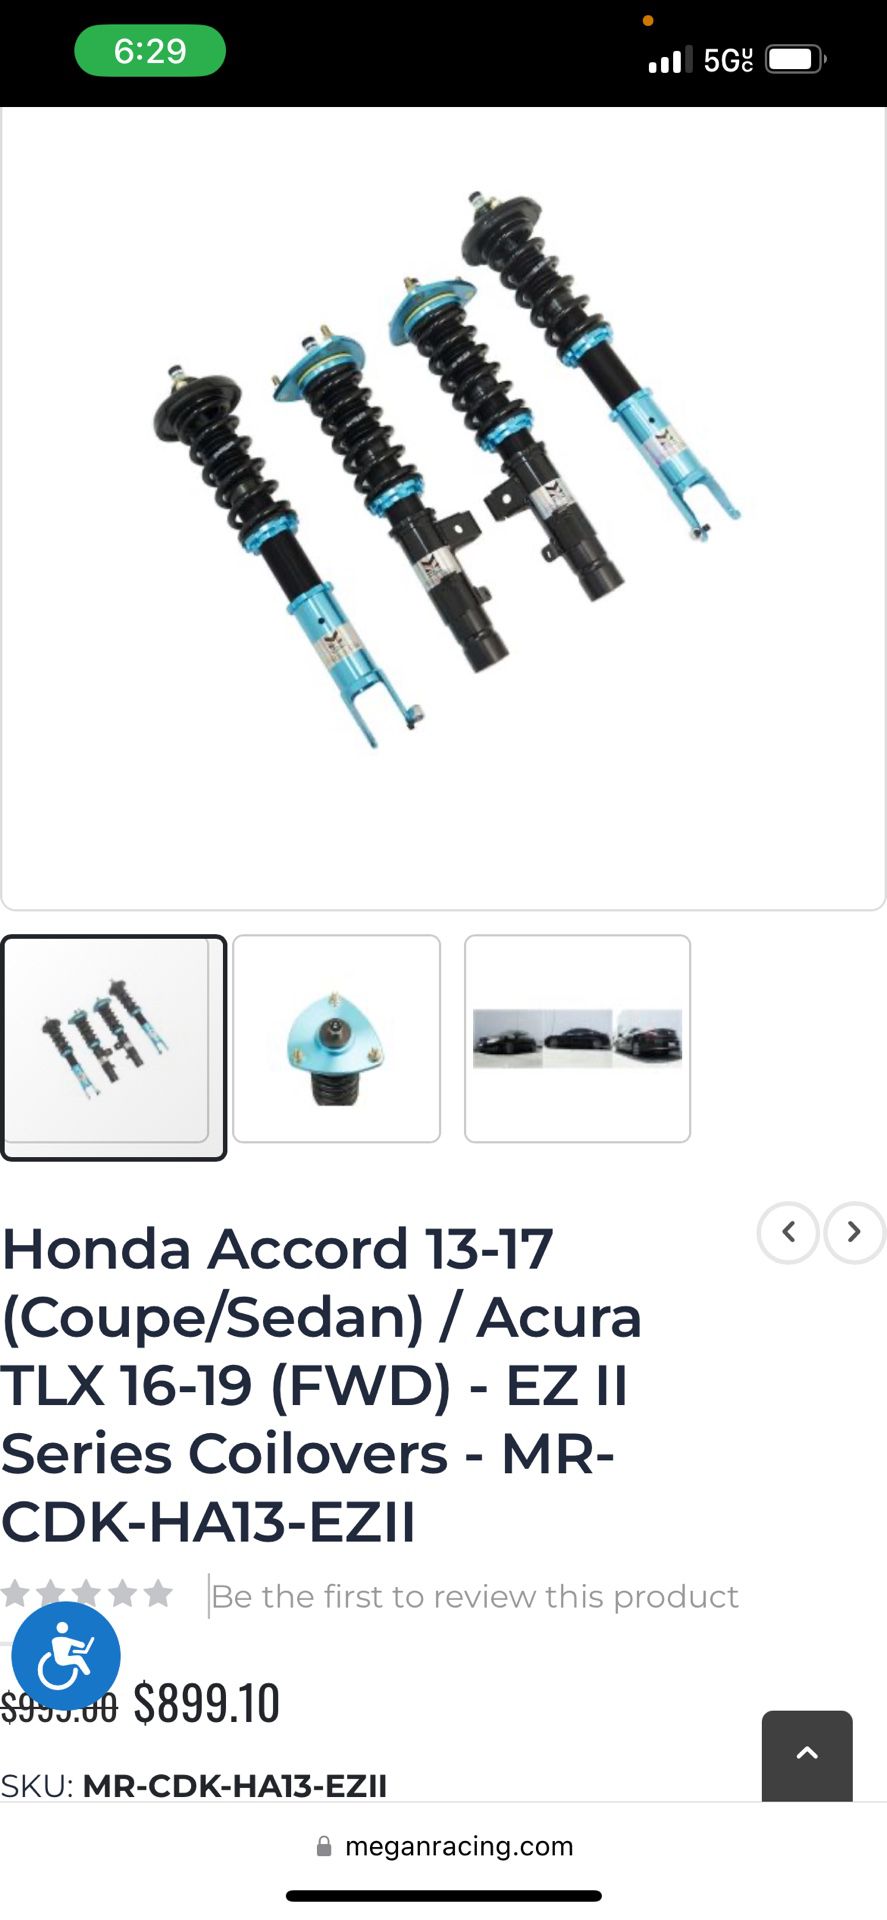 Honda Accord 13-17 (Coupe/Sedan) / Acura TLX 16-19 (FWD) - EZ II Series Coilovers - MR-CDK-HA13-EZII